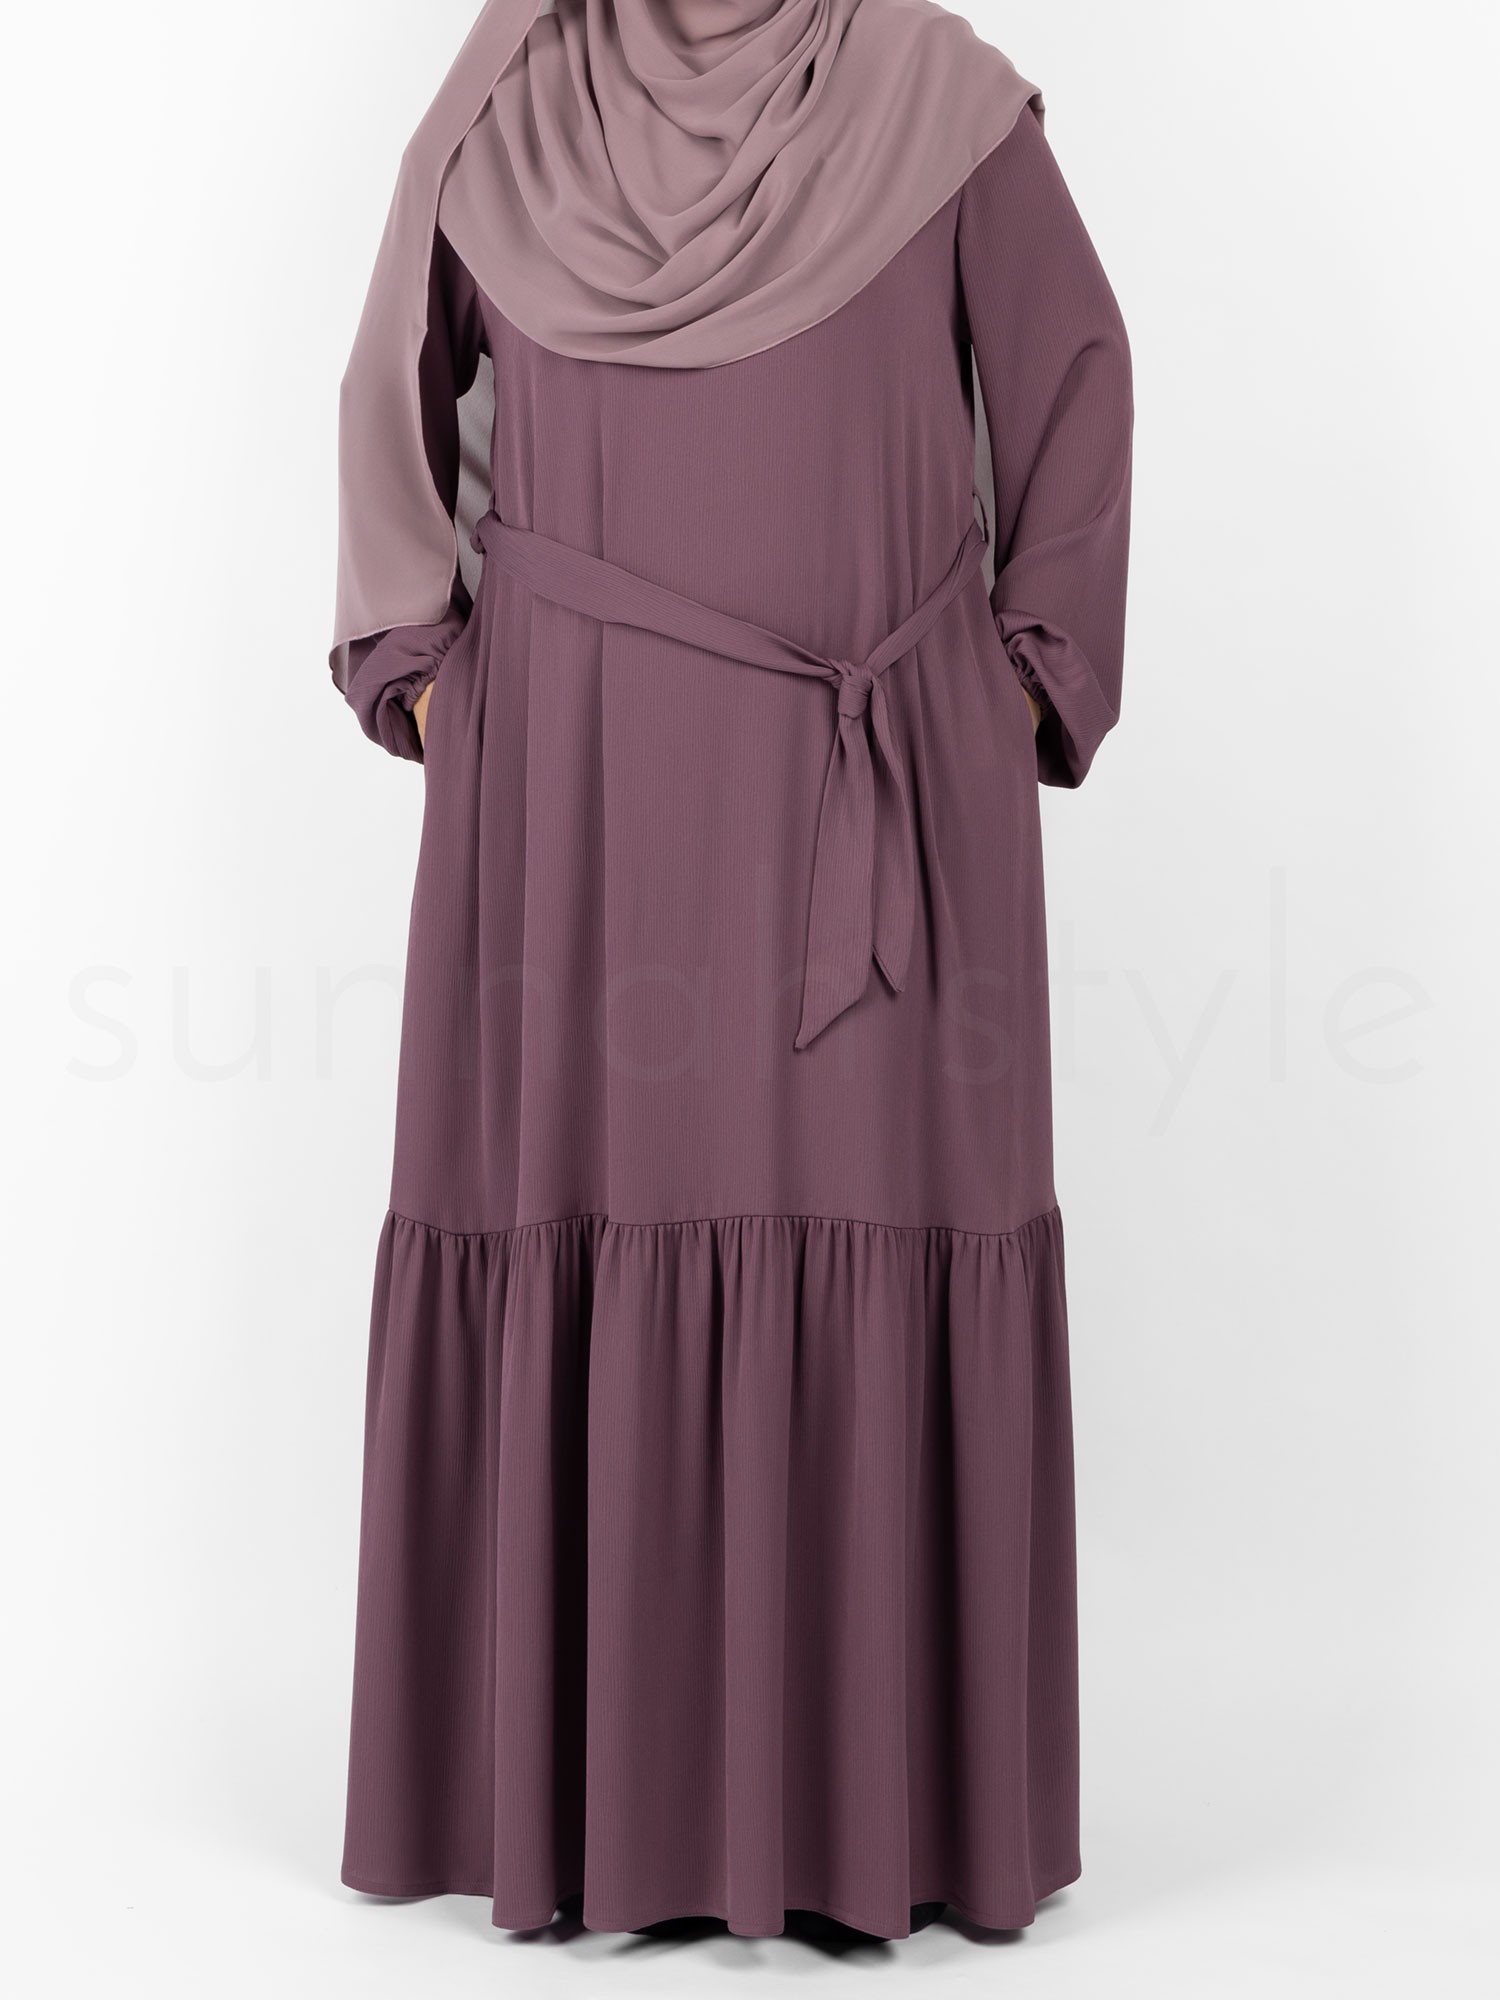 Modest Islamic Clothing by Sunnah Style